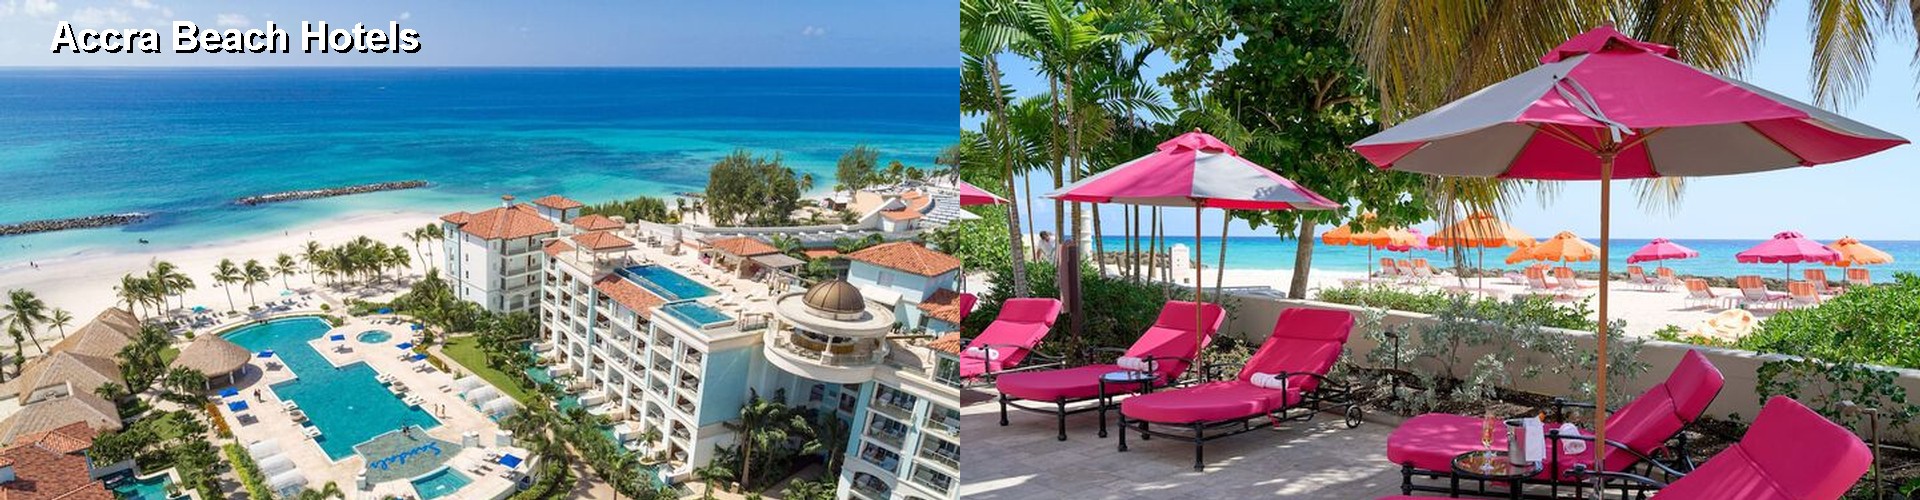 5 Best Hotels near Accra Beach